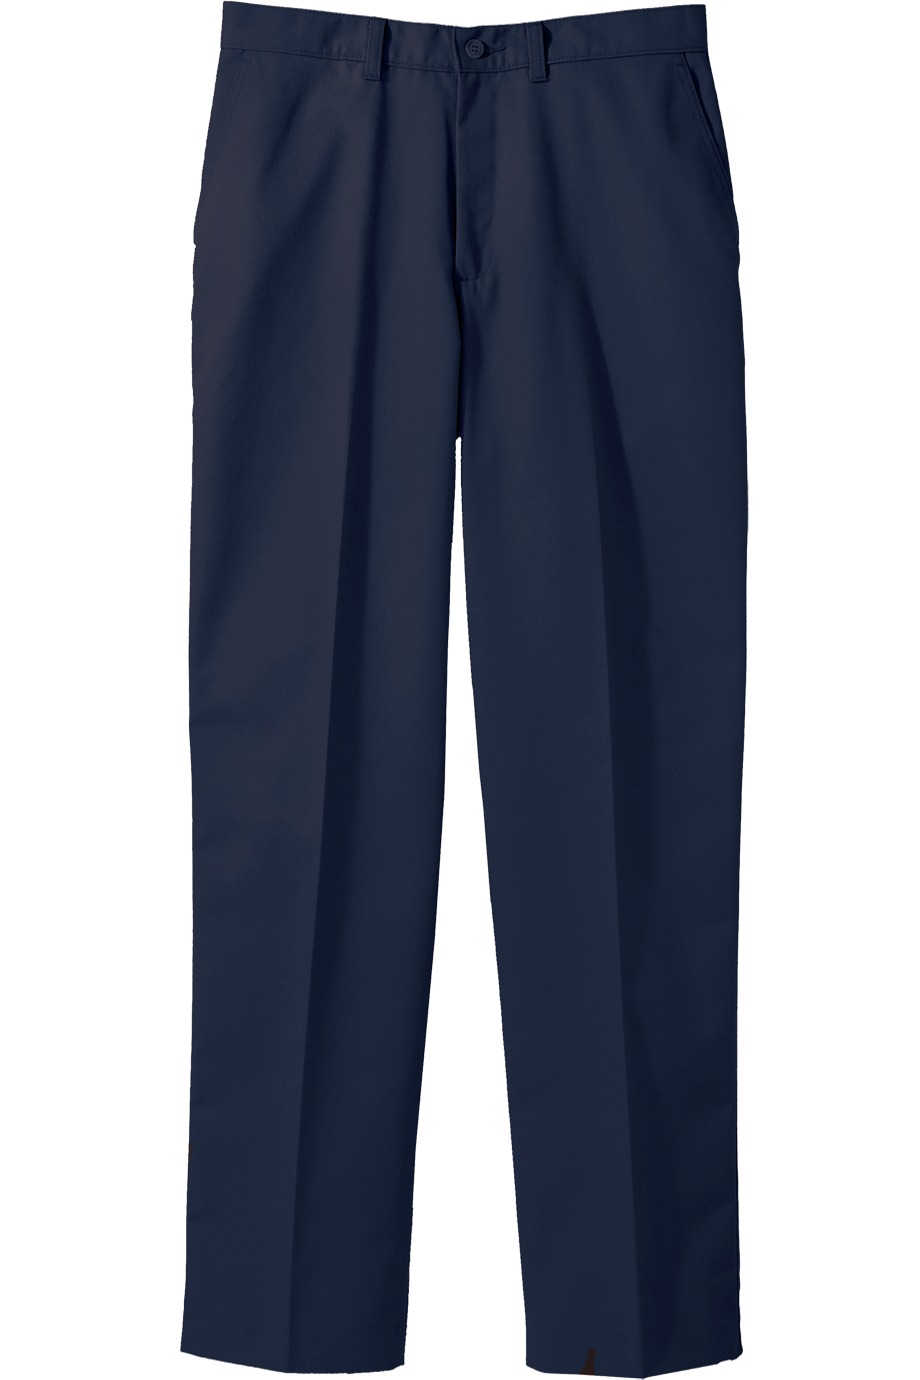 Edwards Garment 2570 - Men's Blended Chino Flat Front Pant